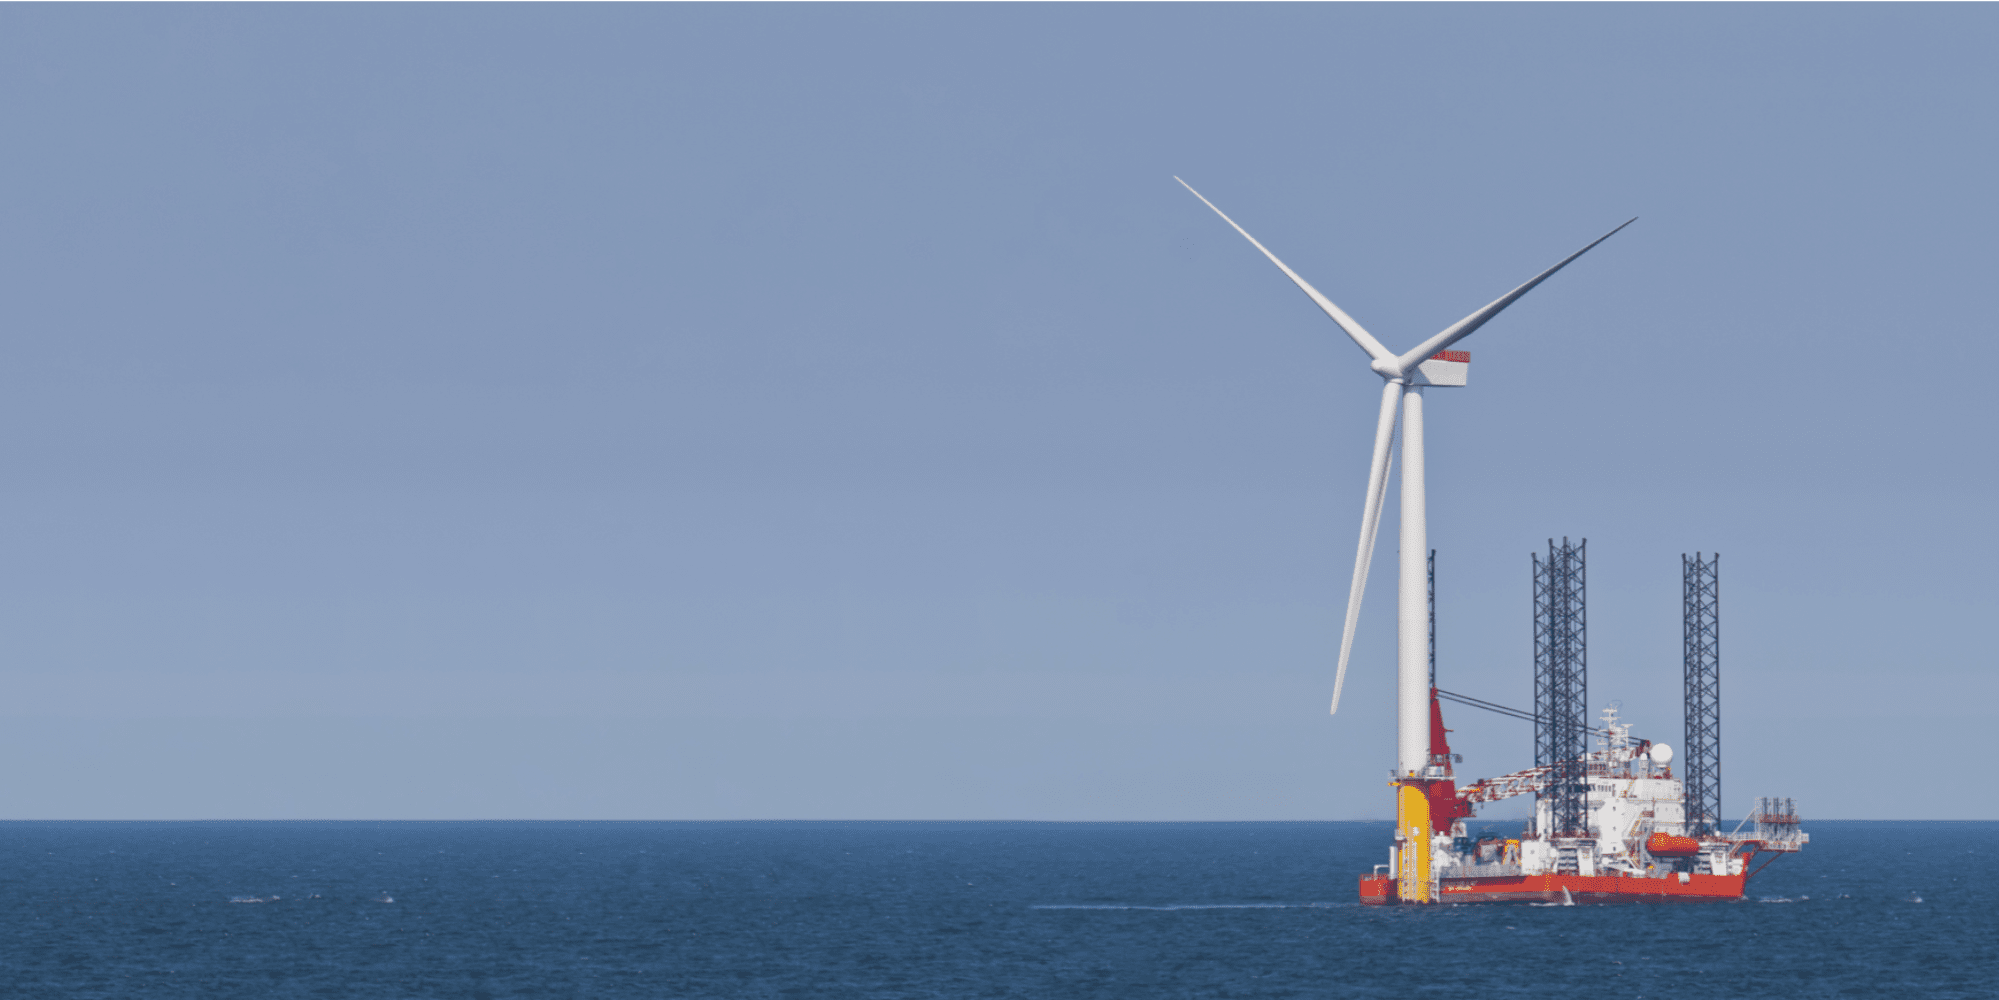 Wind turbine onboard rig at sea